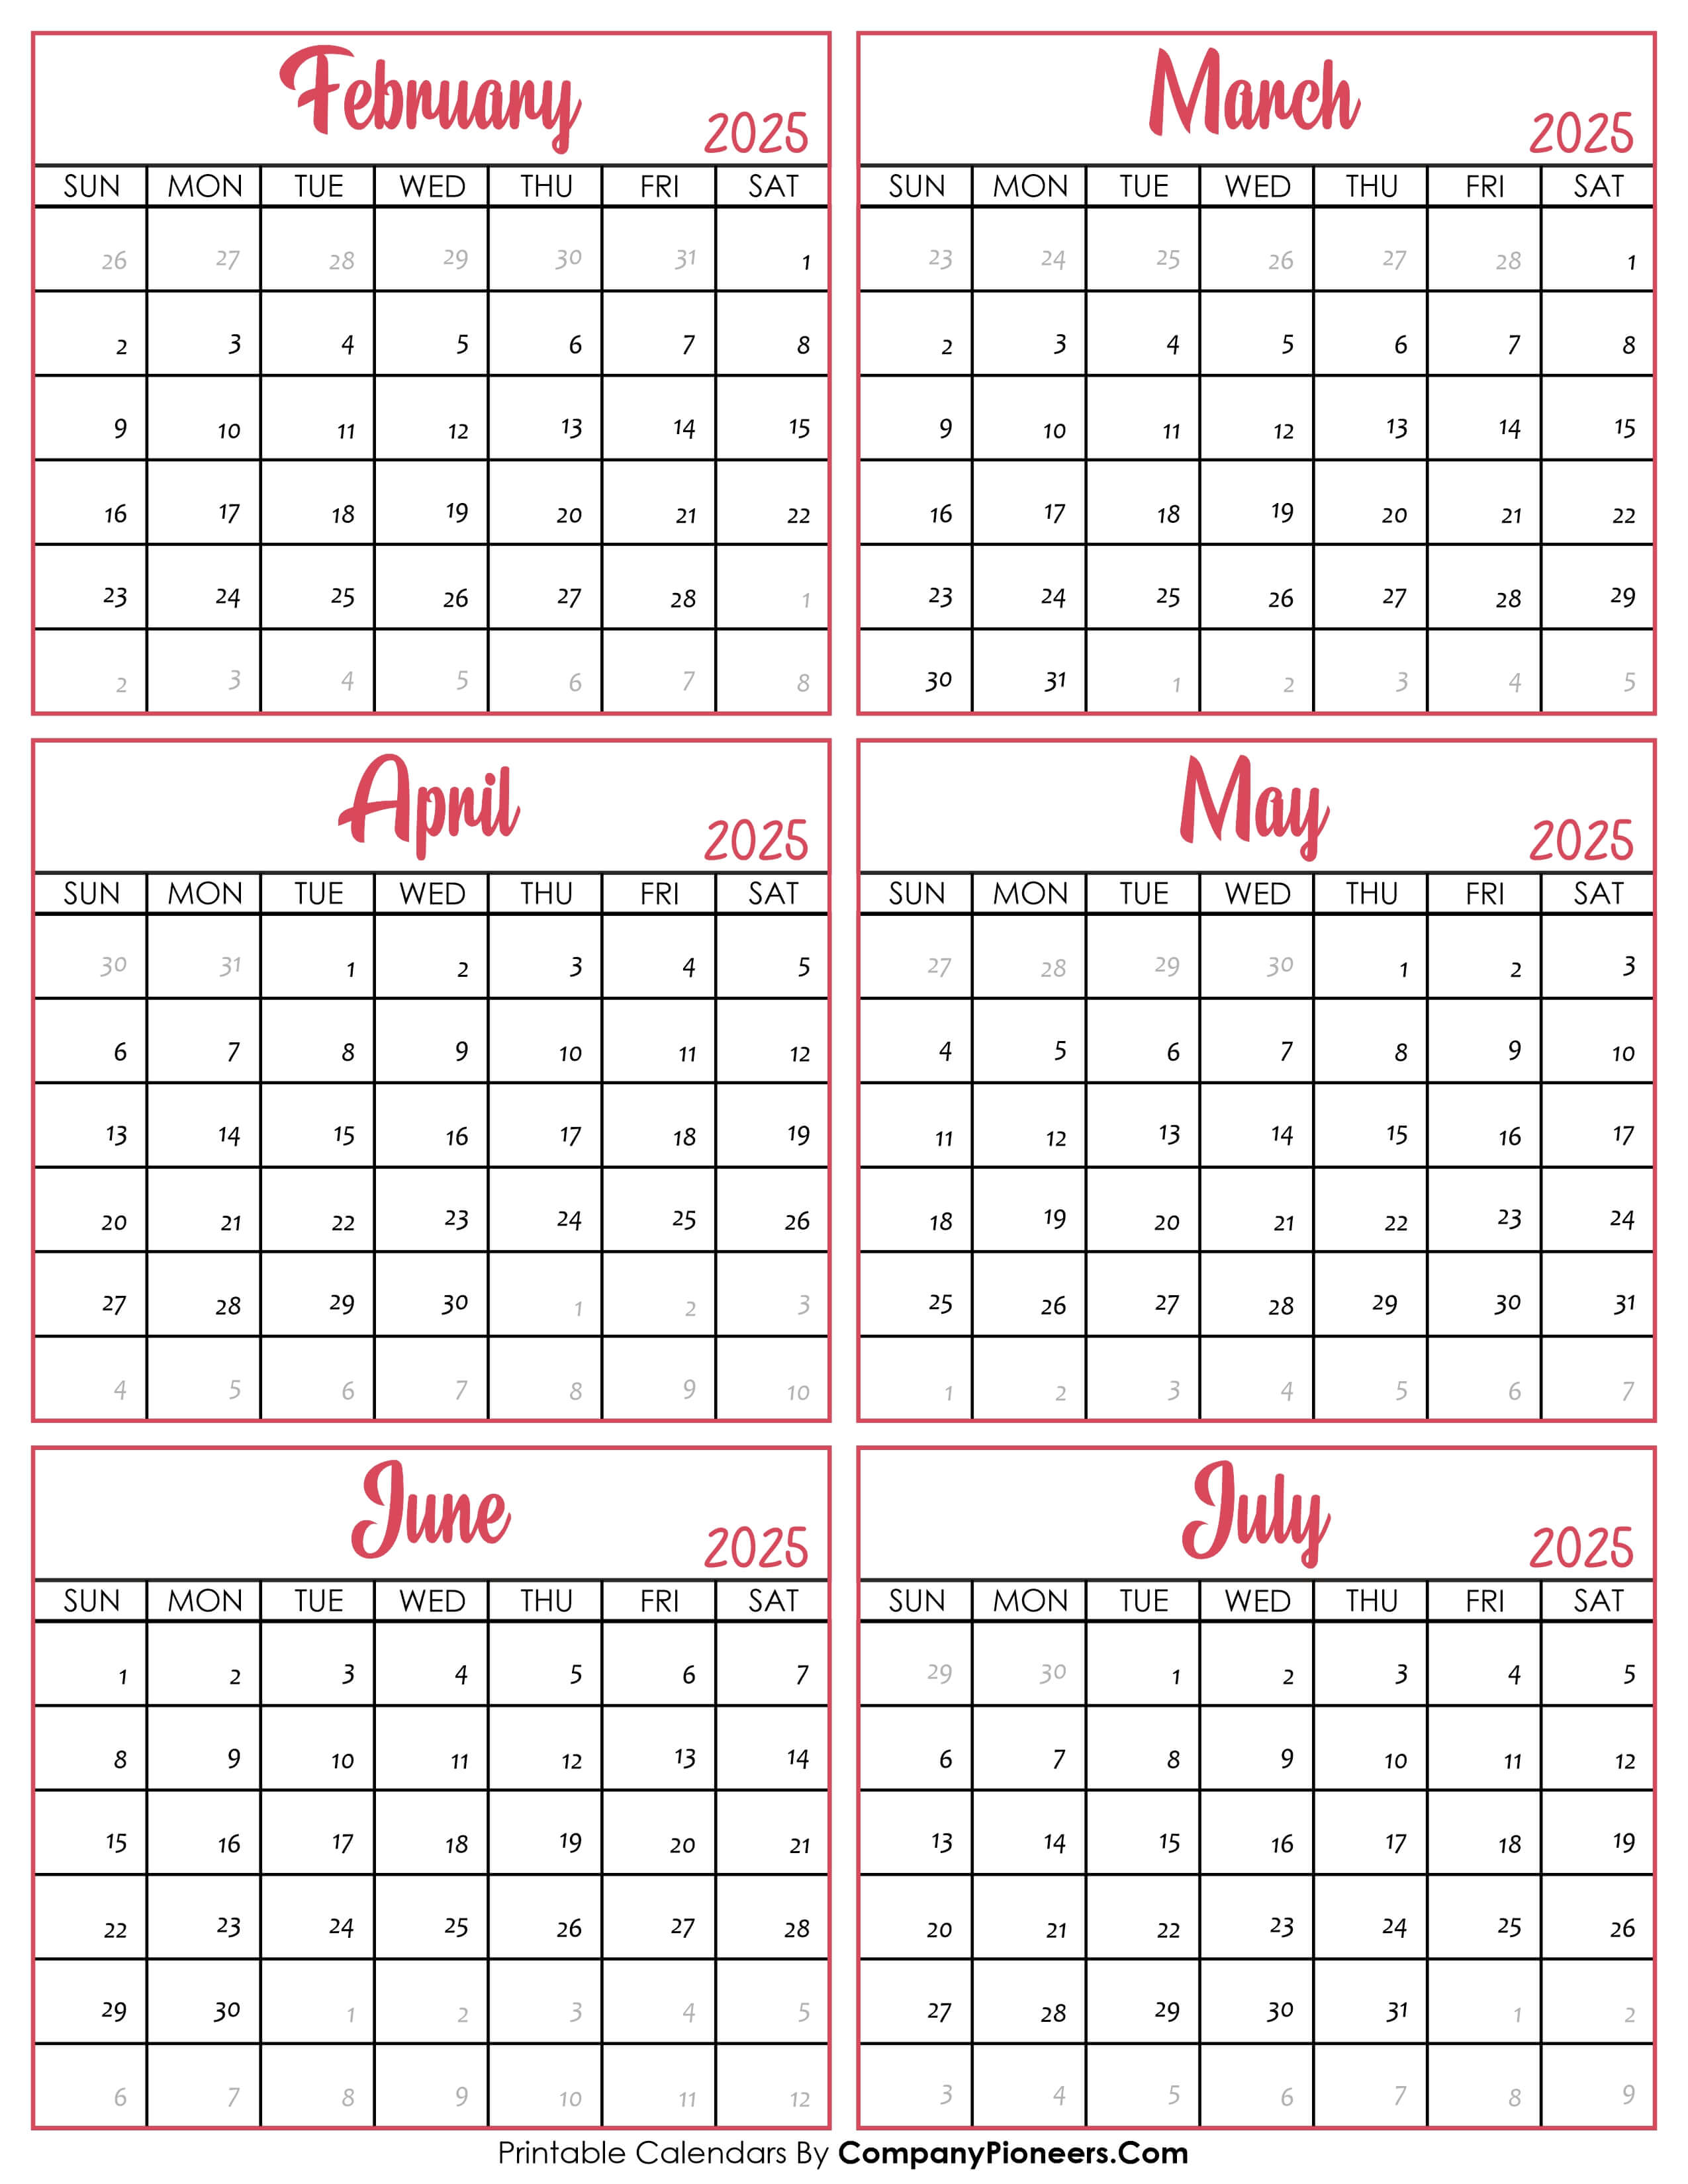 Calendar February to July 2025